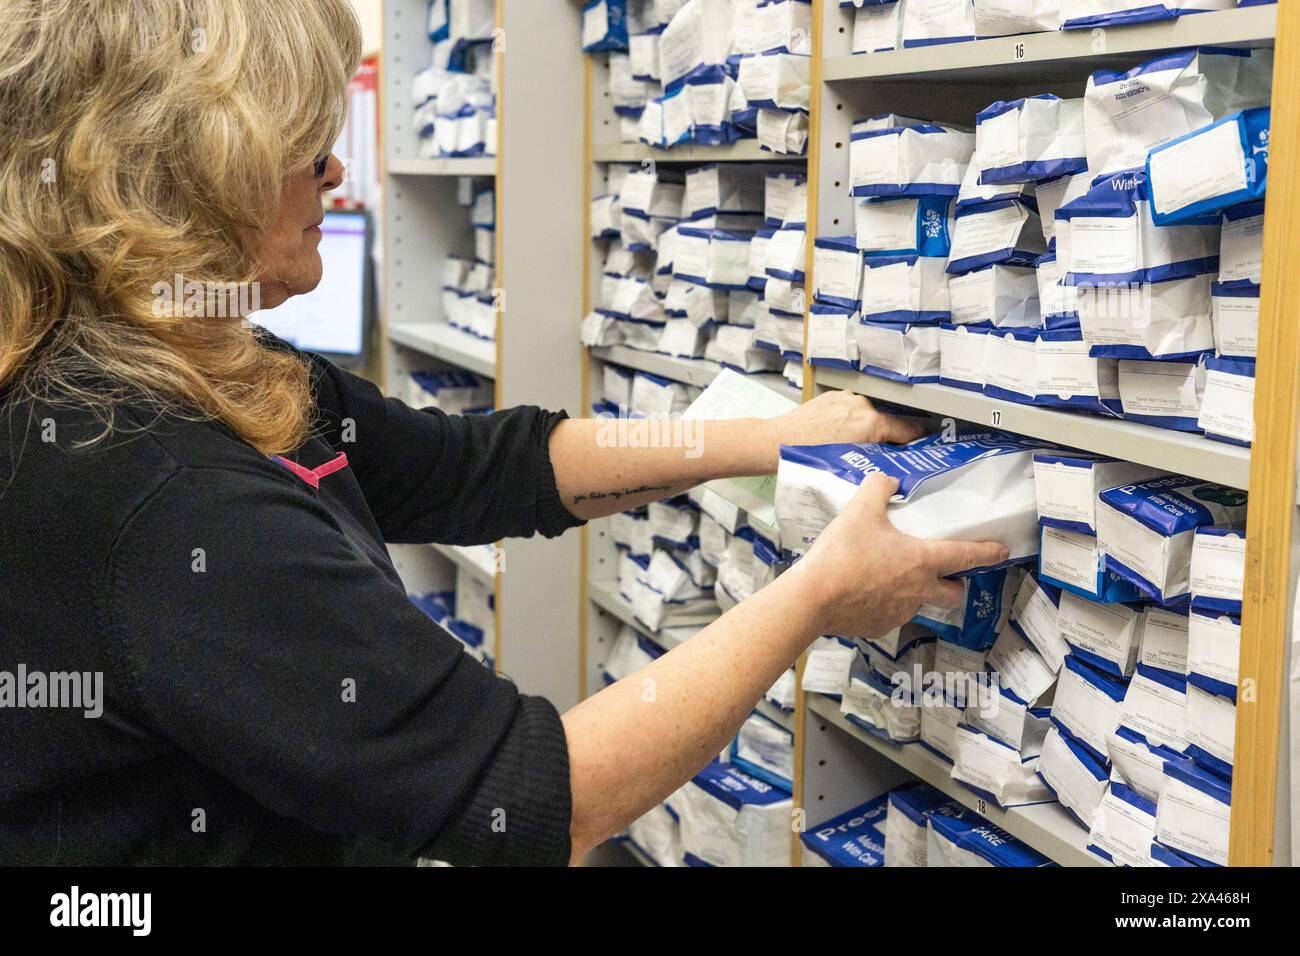 Woman stocking pharmacy shelves with medication. Stock Photo